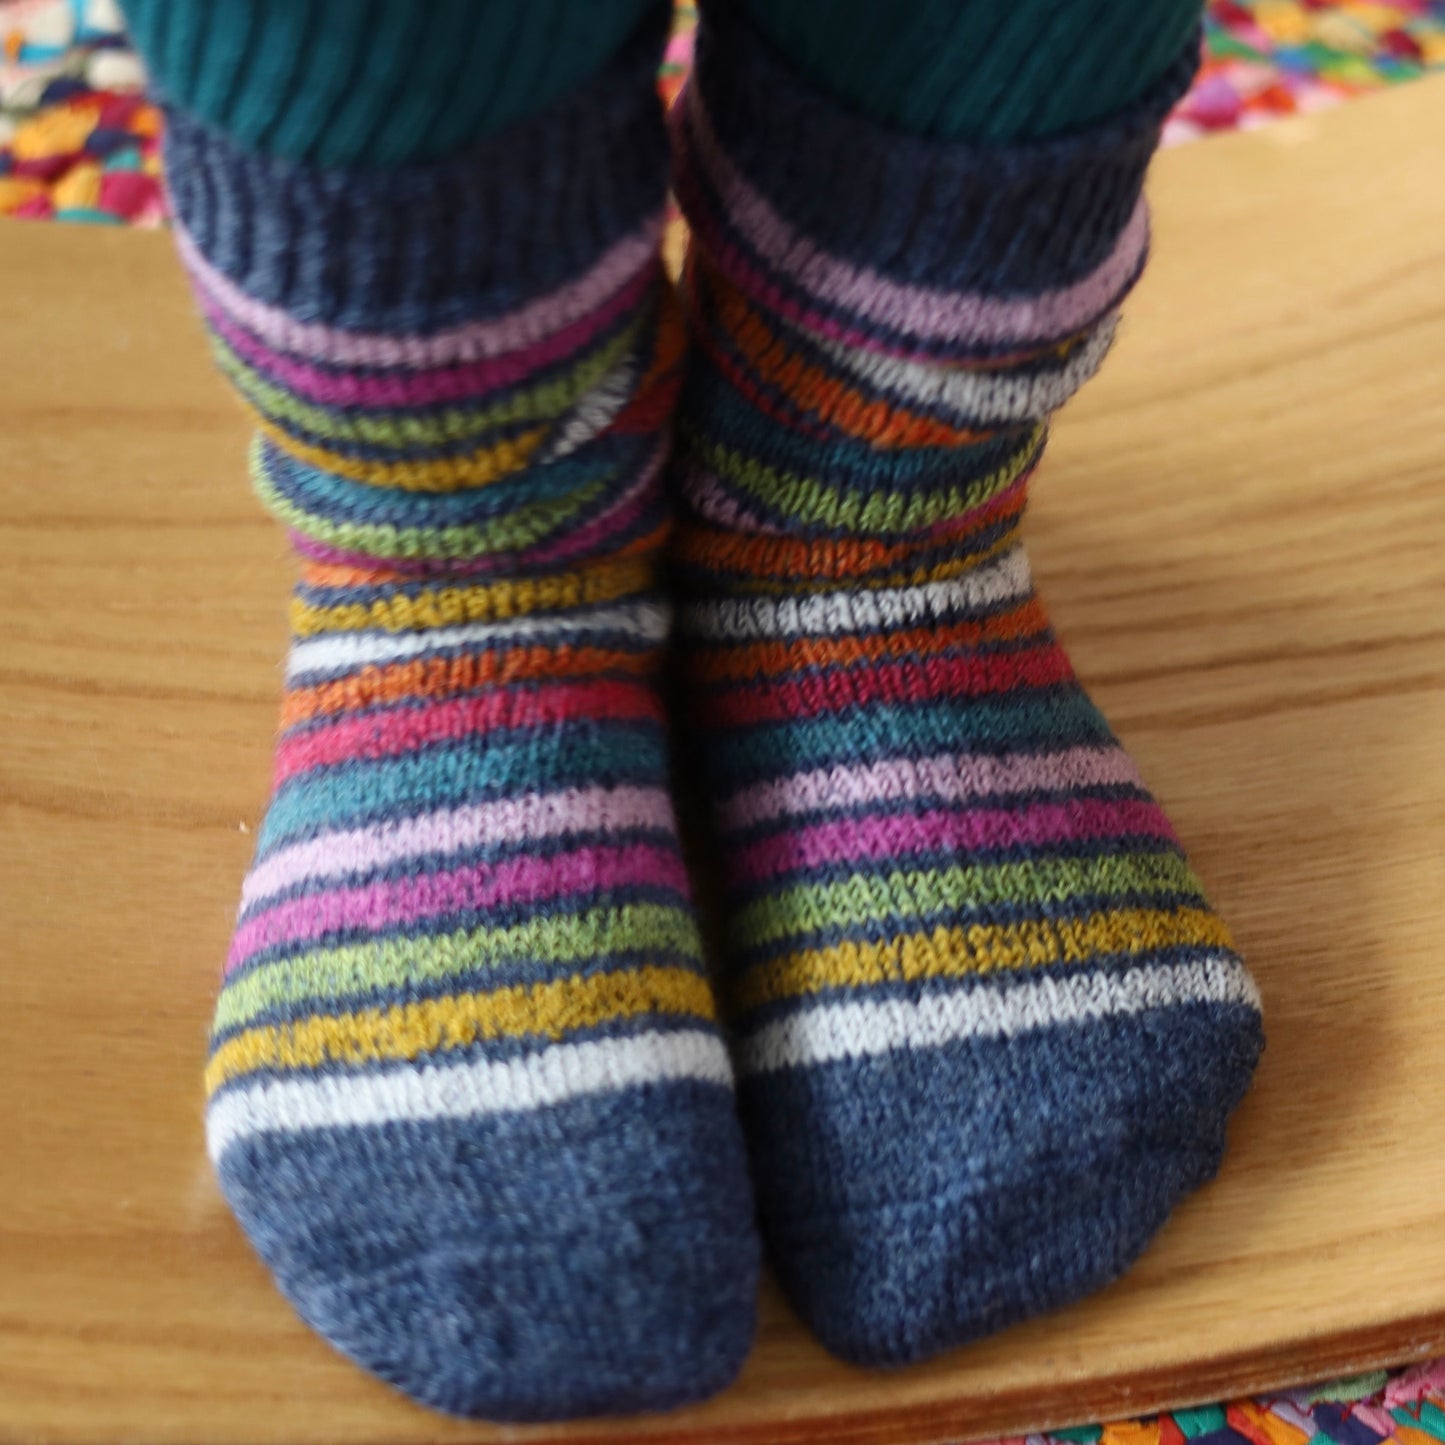 Hirsch Natur Child Sock, Rainbow Stripe